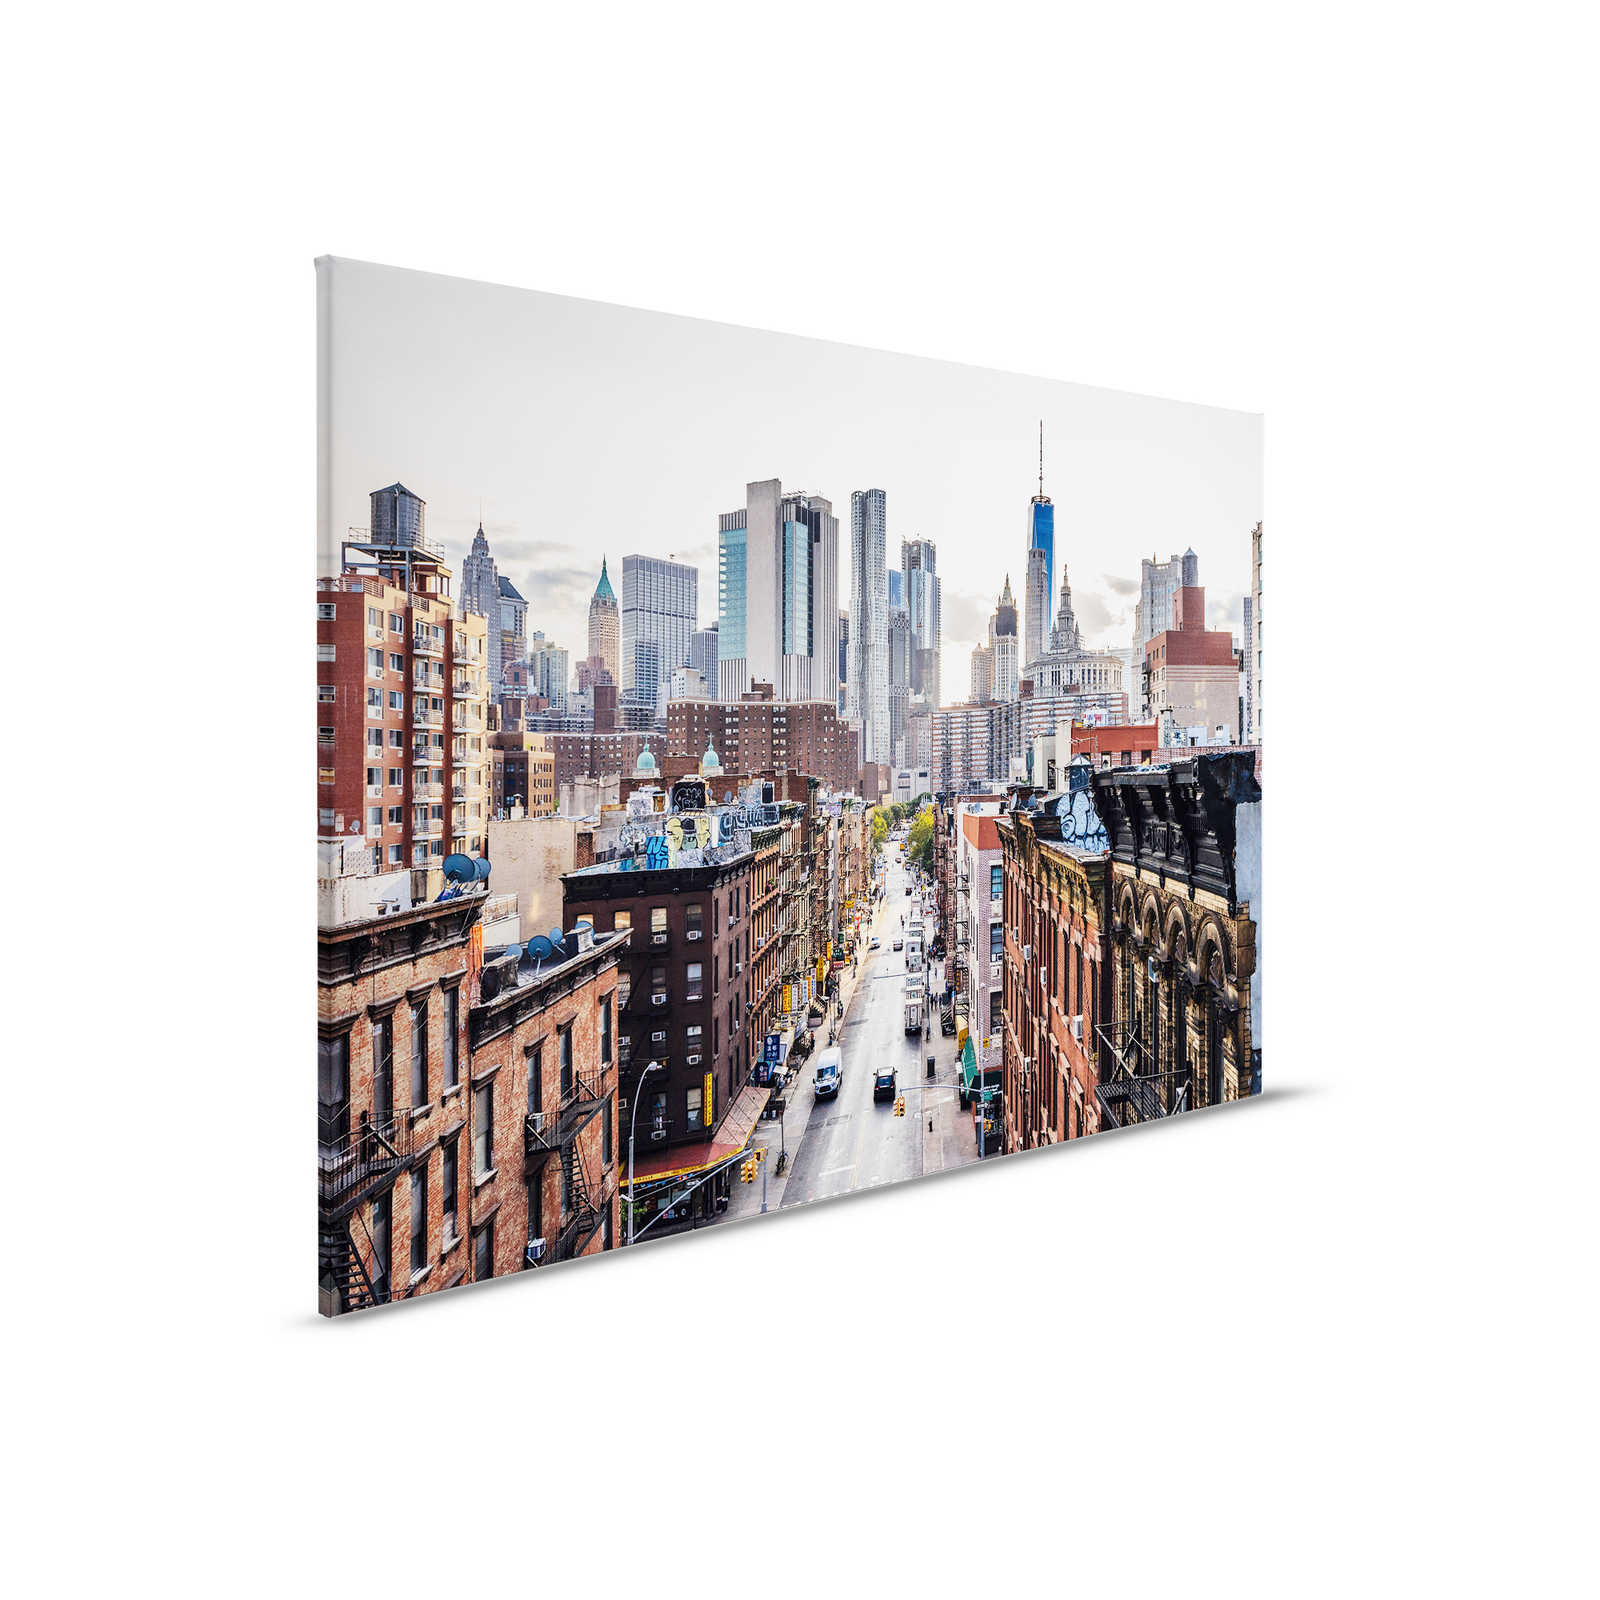         New York Canvas with Skyline - 0.90 m x 0.60 m
    